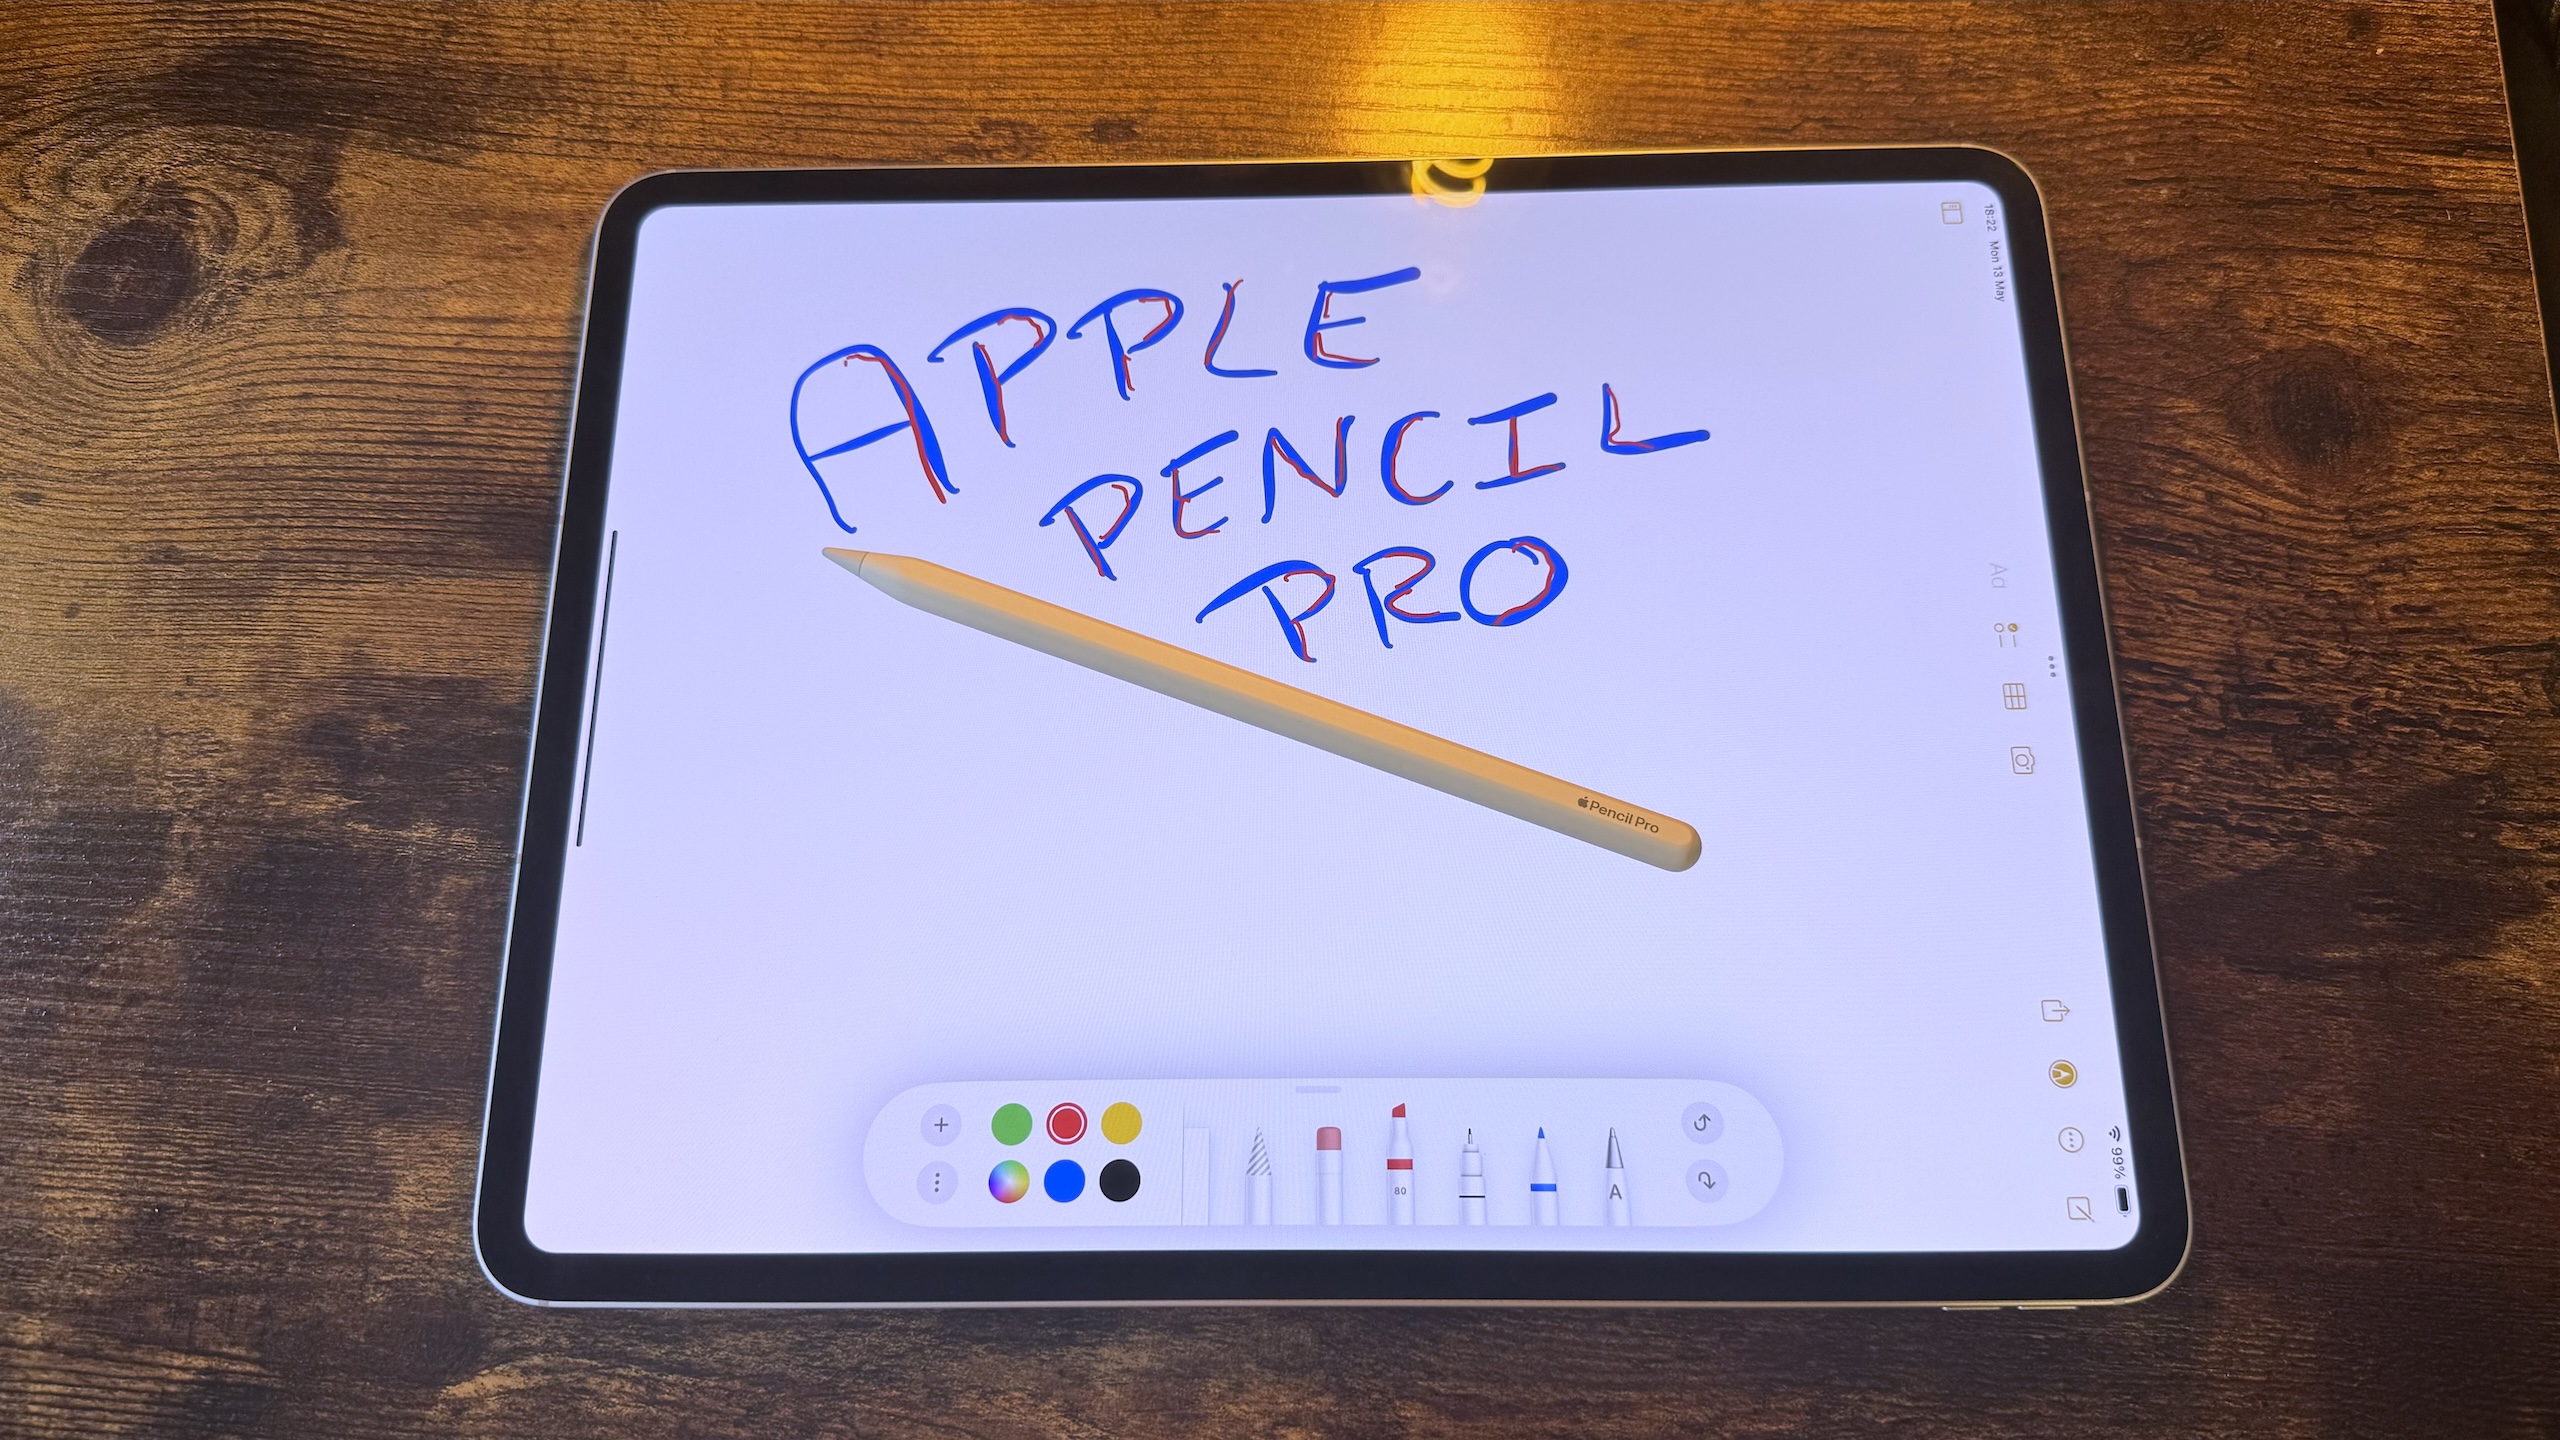 Apple Pencil Pro with iPad